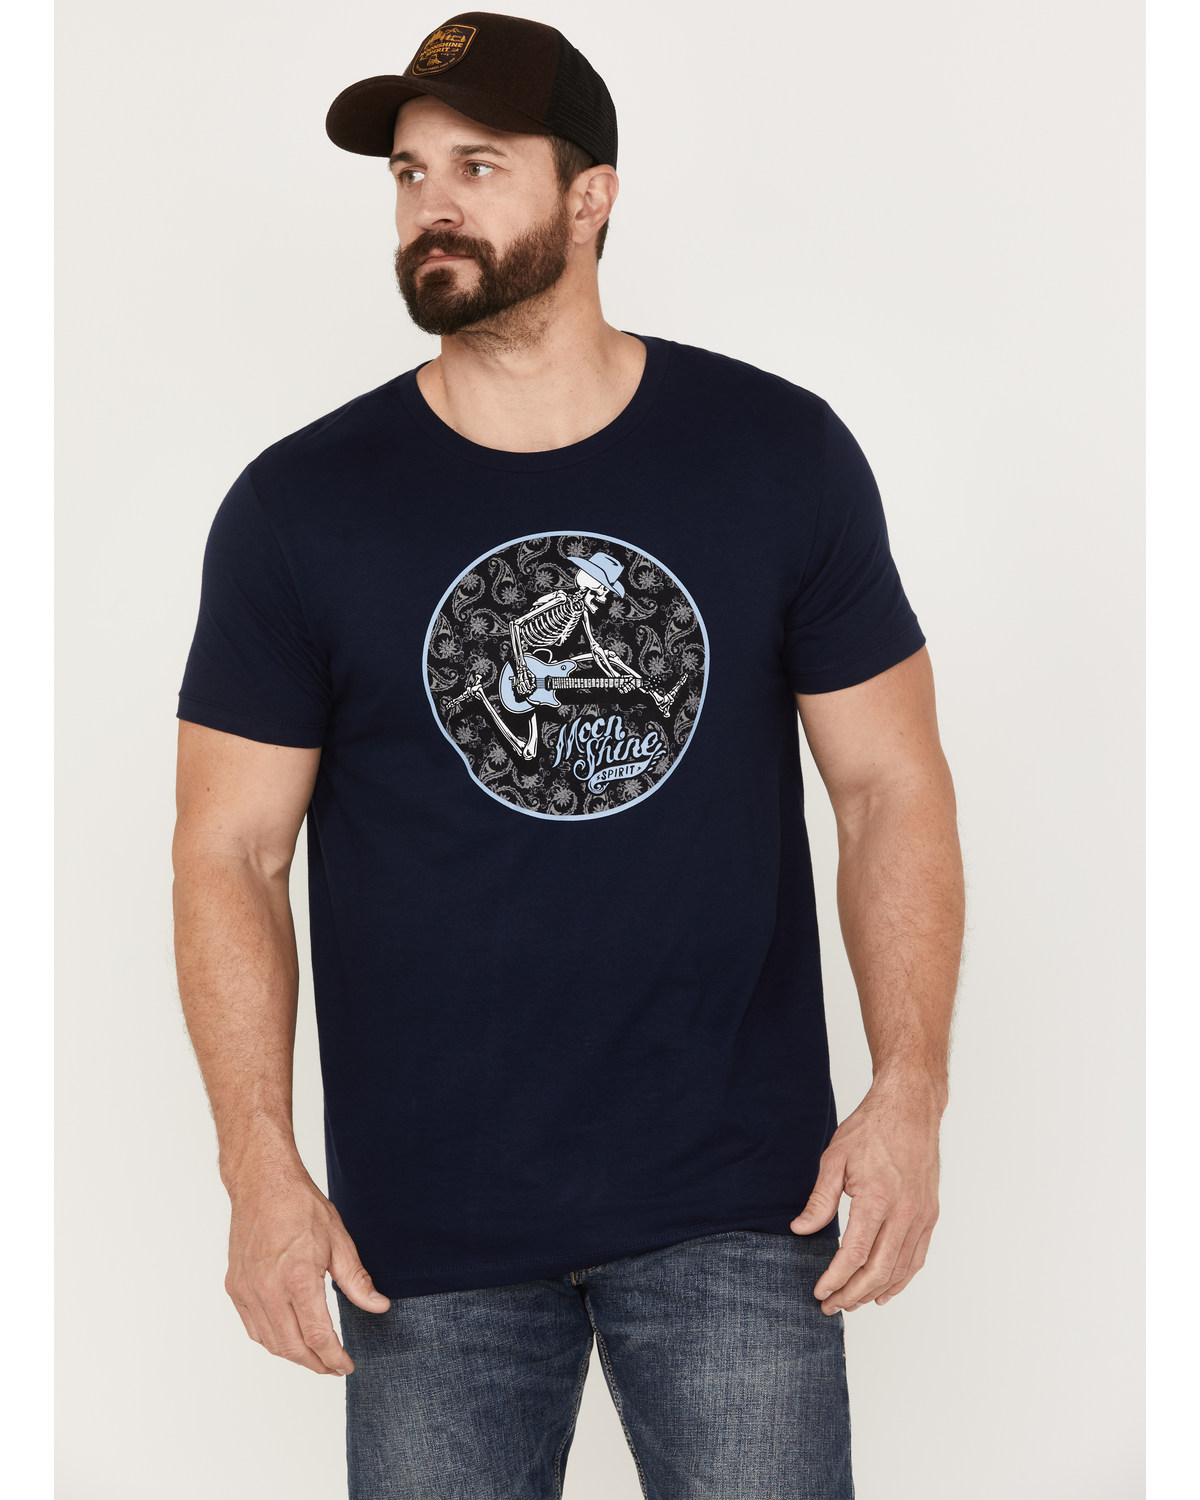 Moonshine Spirit Men's Navy Skull Moon Graphic Short Sleeve T-Shirt